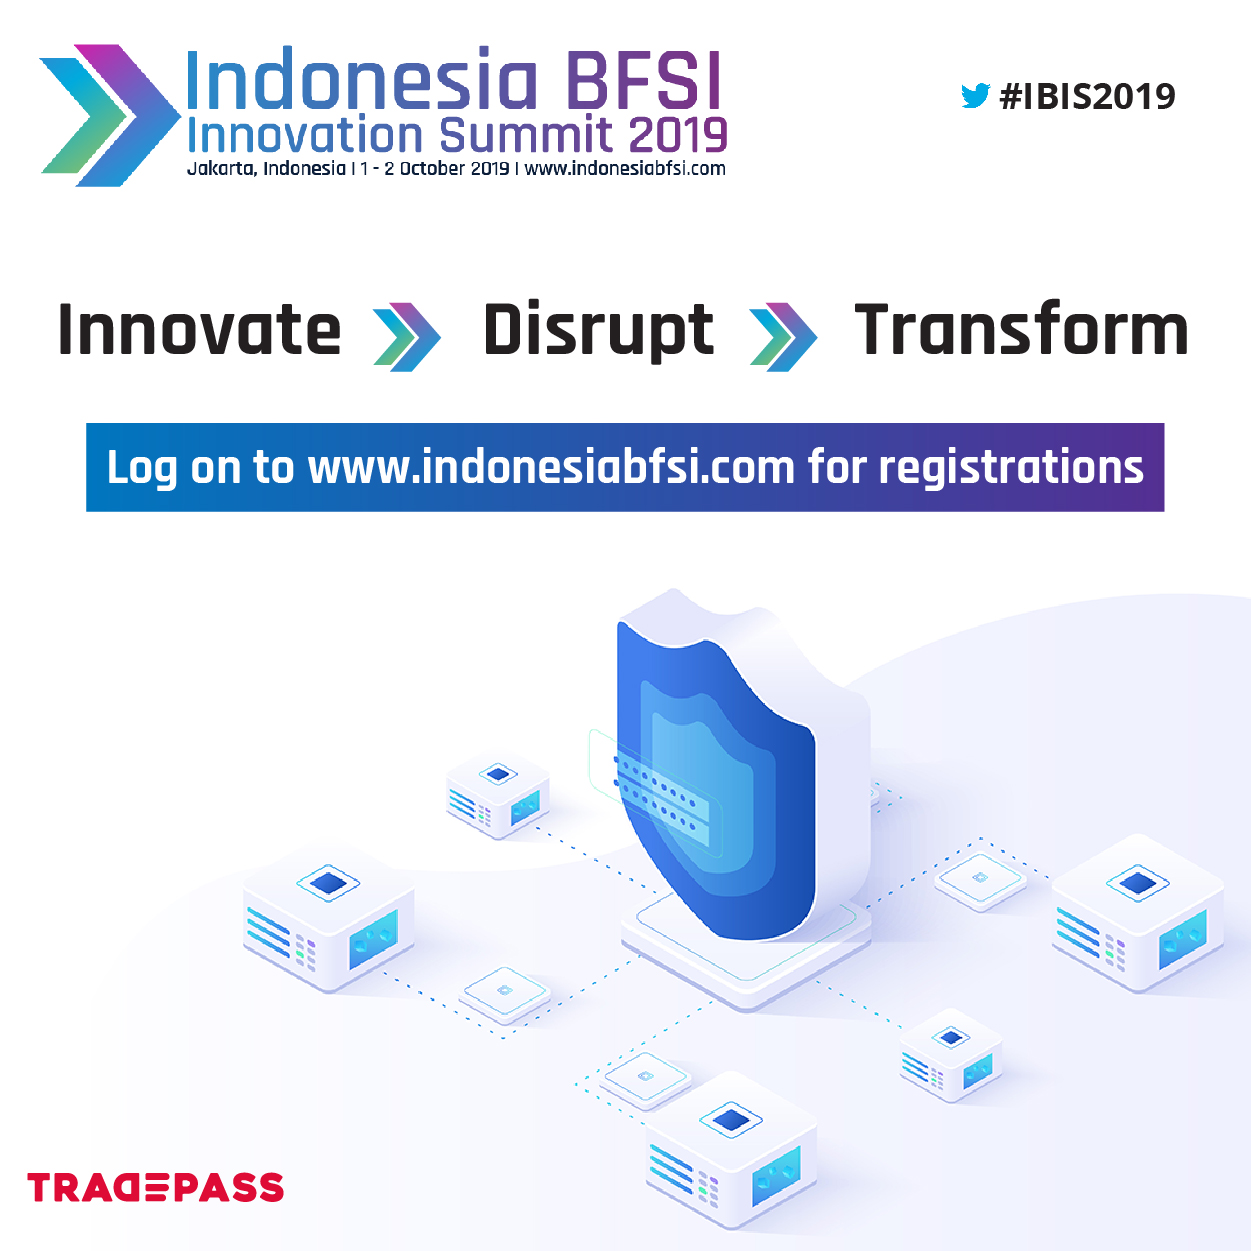 Indonesia BFSI Innovation Summit 2019 organized by Tradepass